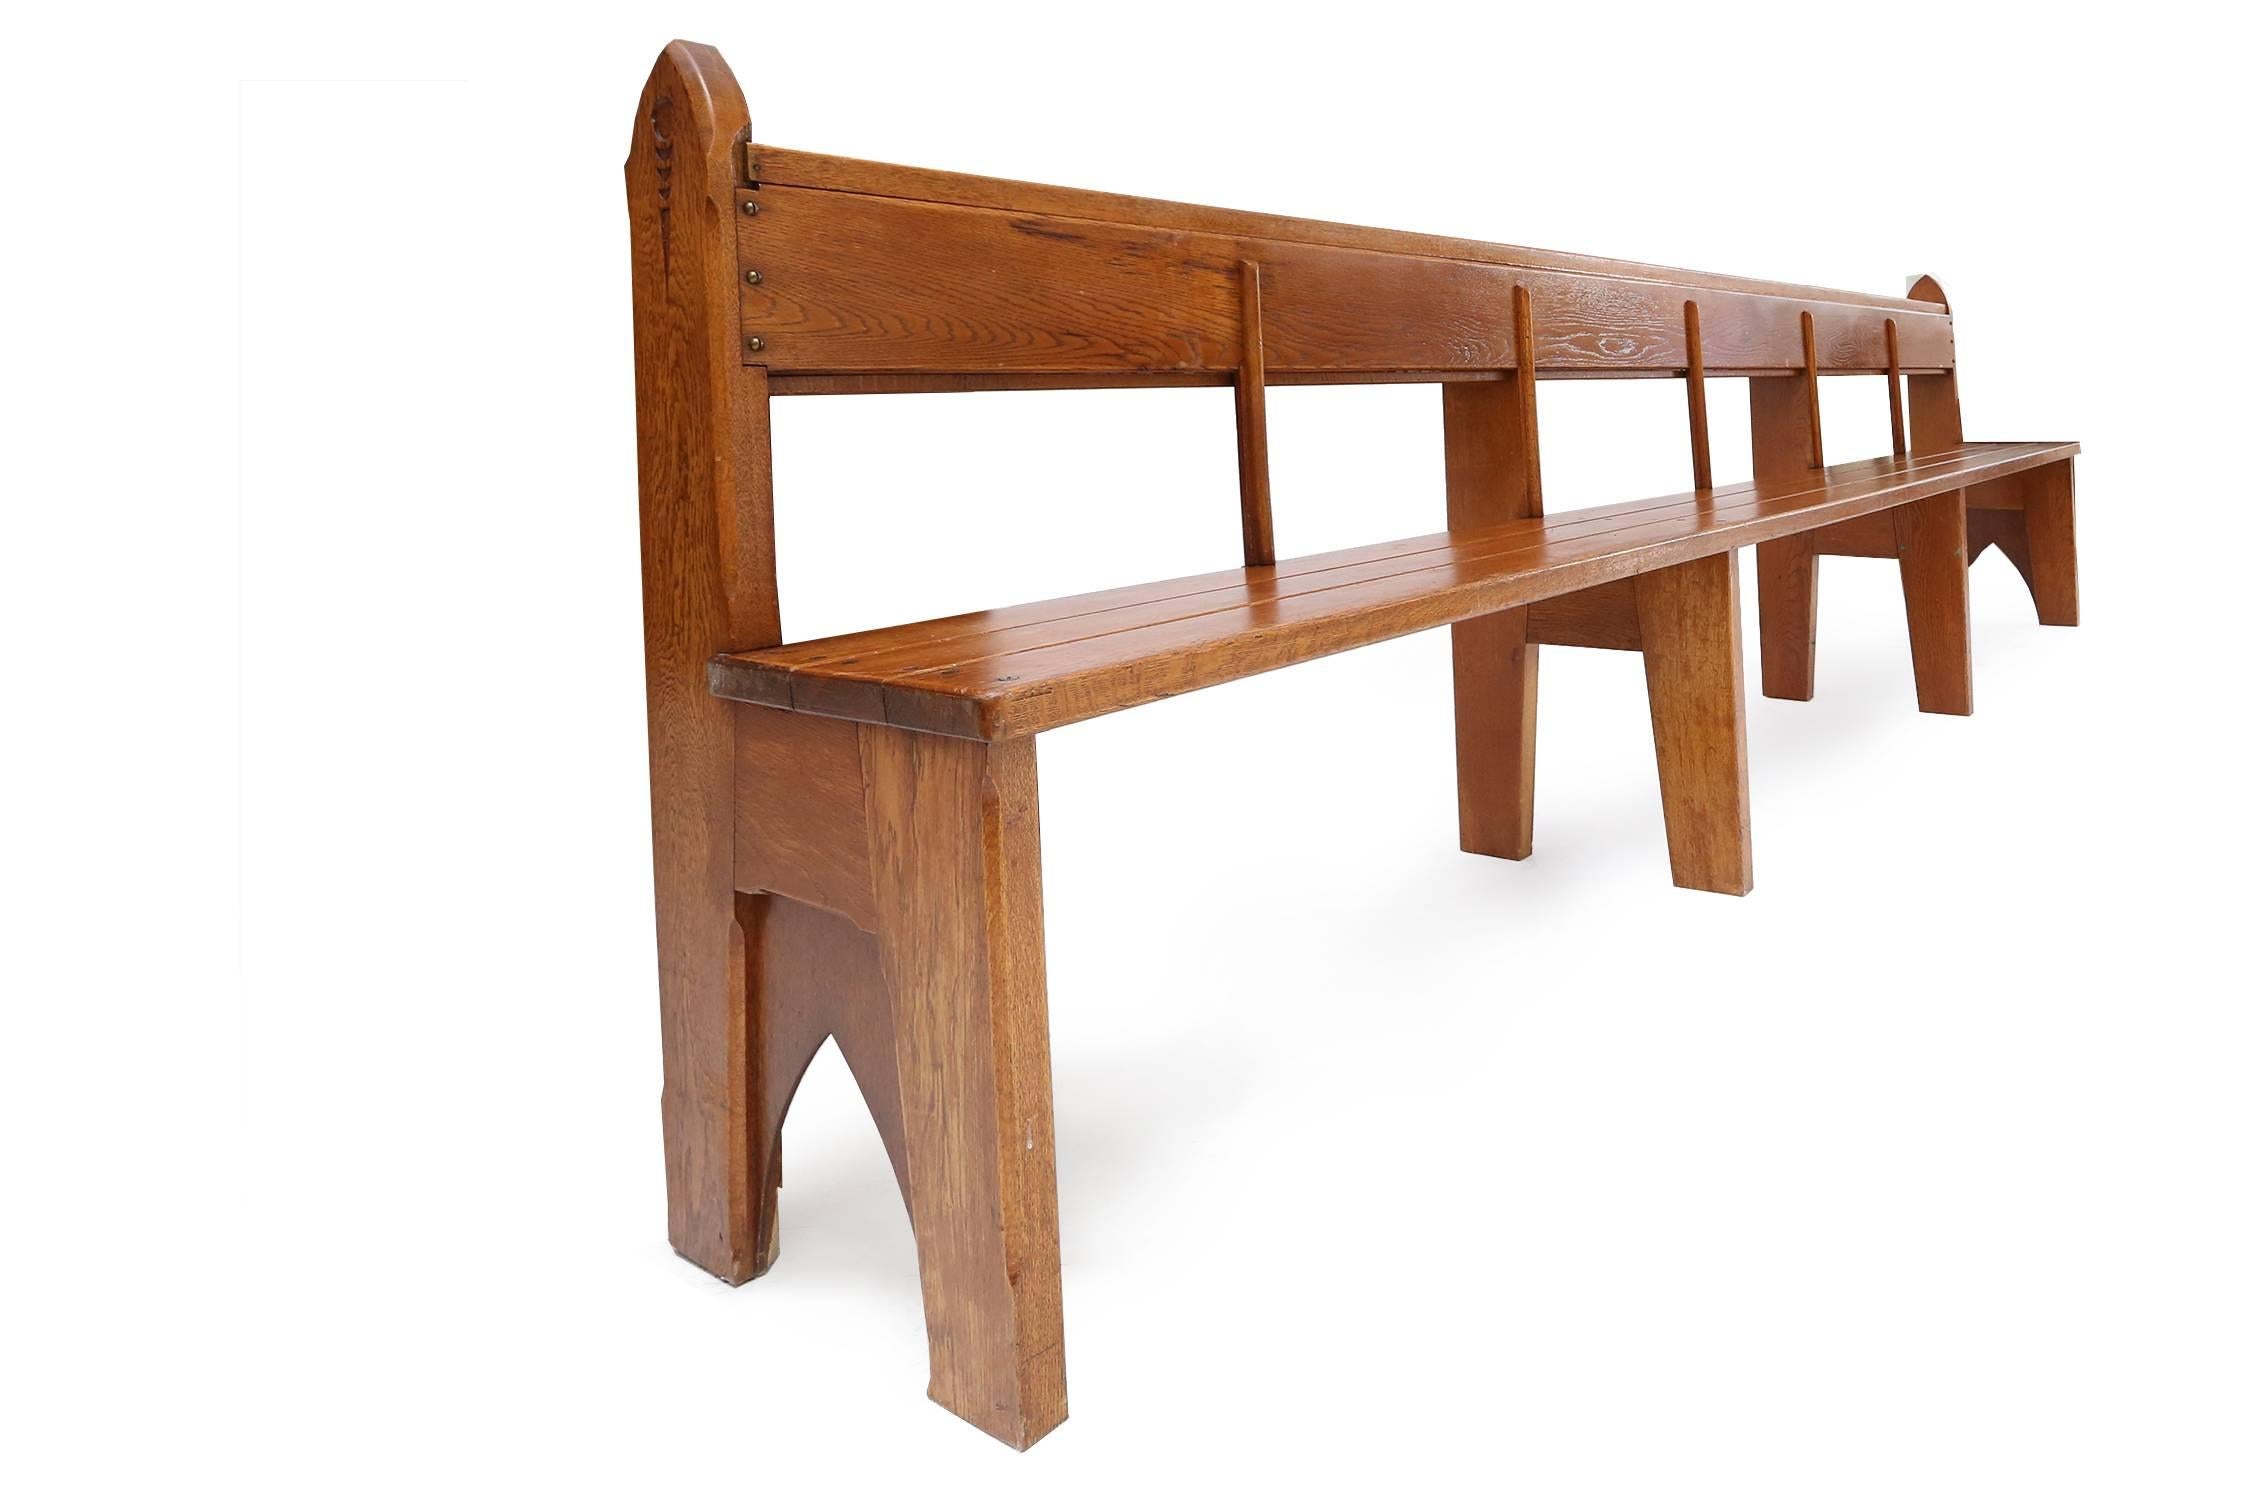 Amsterdam school Art Deco style benches N°I
solid oak.
Netherlands, 1920s.
Measures: L 310 cm H 96 cm D 46 cm.
 